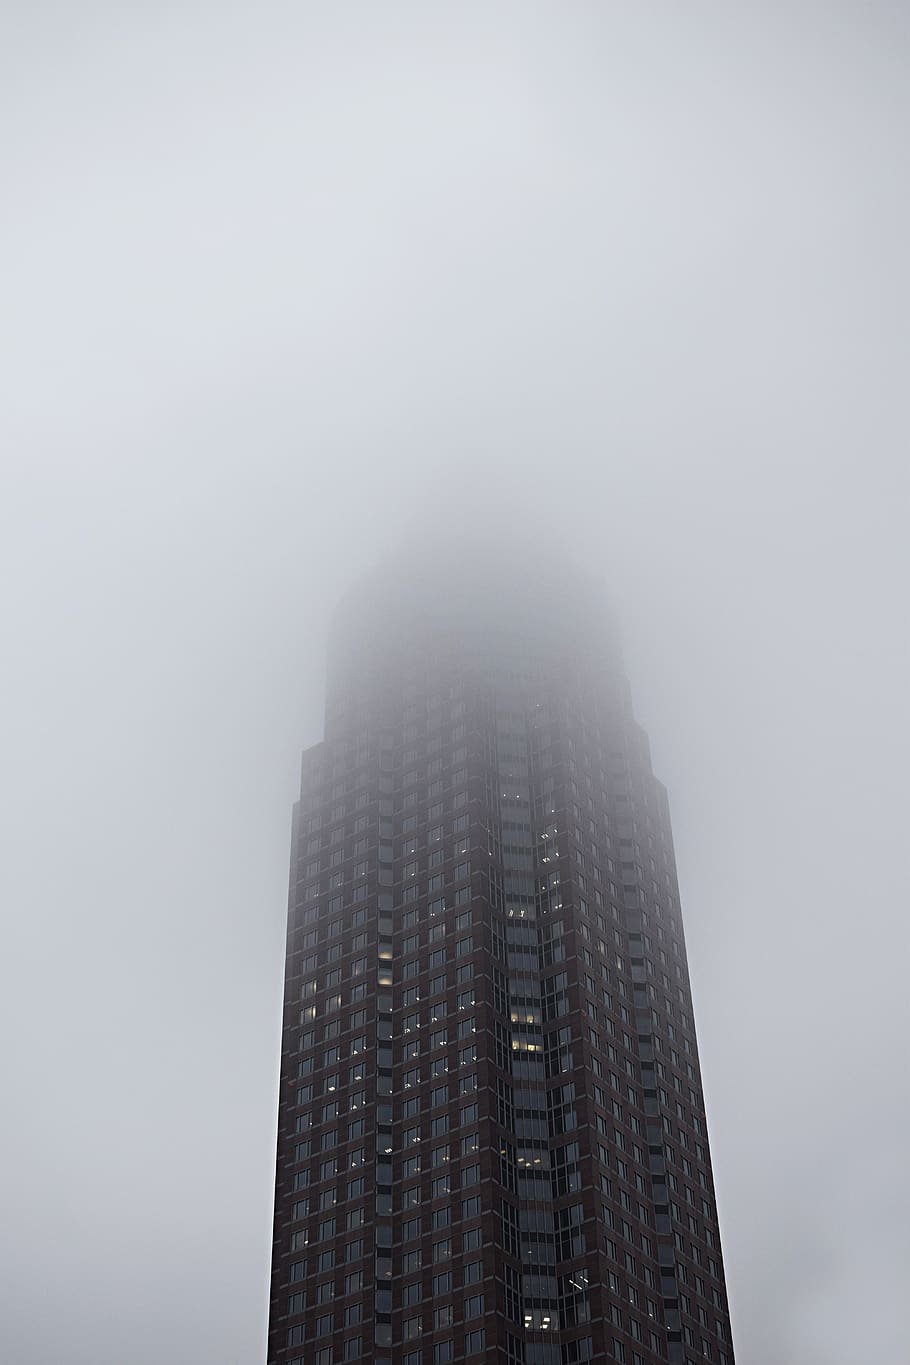 fair, frankfurt, fog, rain, skyline, skyscraper, messeturm, architecture, modern, office building